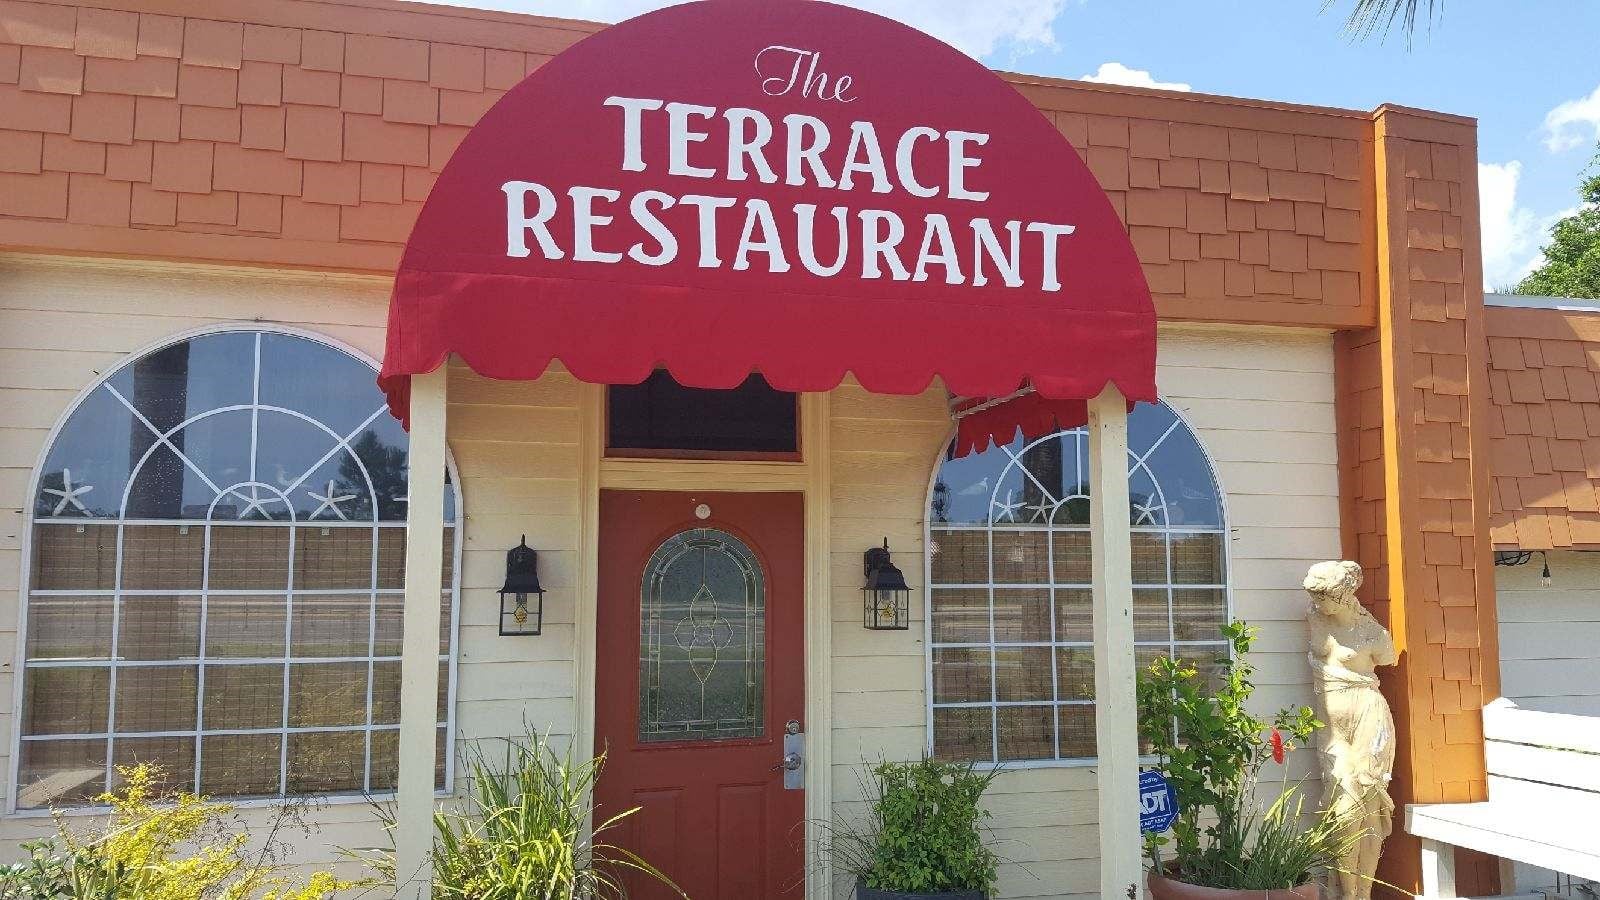 The Terrace Restaurant